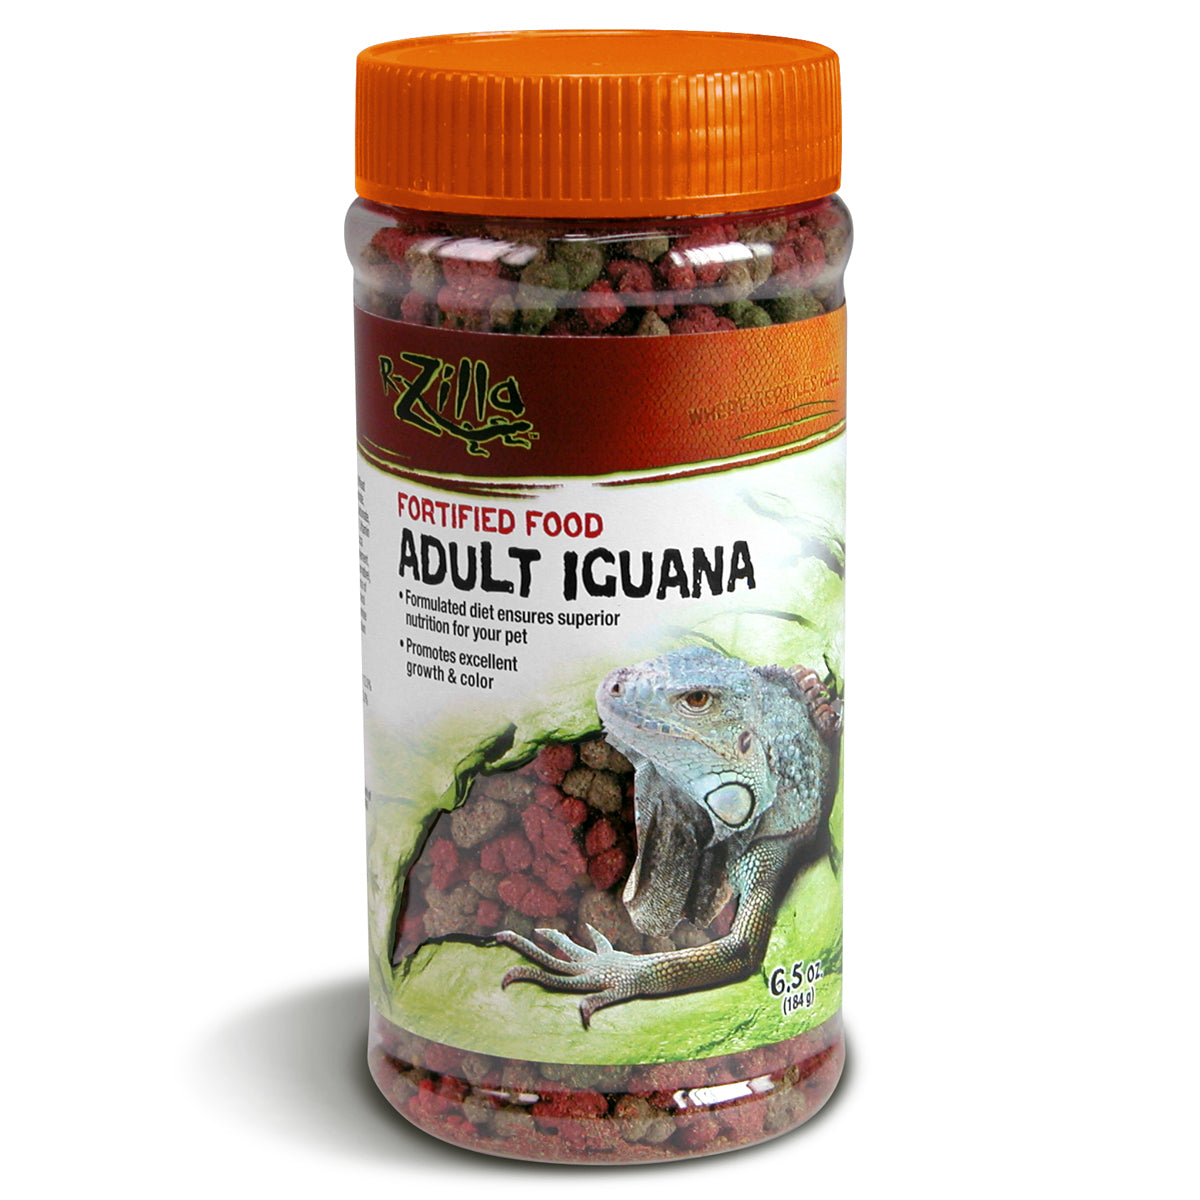 Zilla Fortified Adult Iguana Food - 6.5 oz